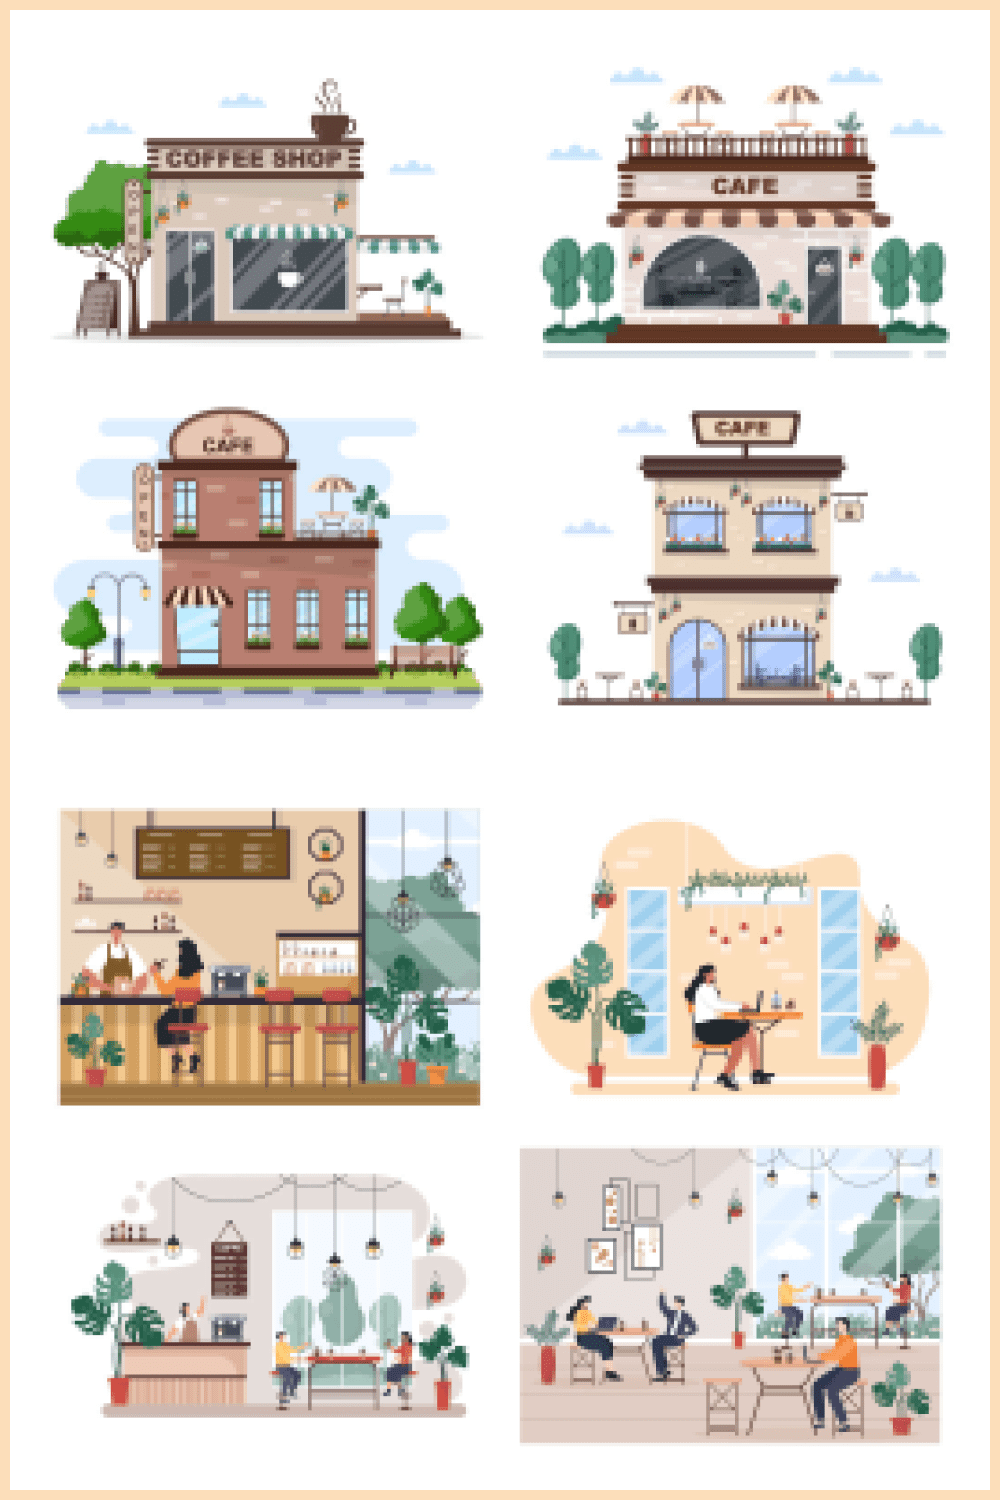 19 Cafe or Coffee Shop Illustrations - MasterBundles - Pinterest Collage Image.